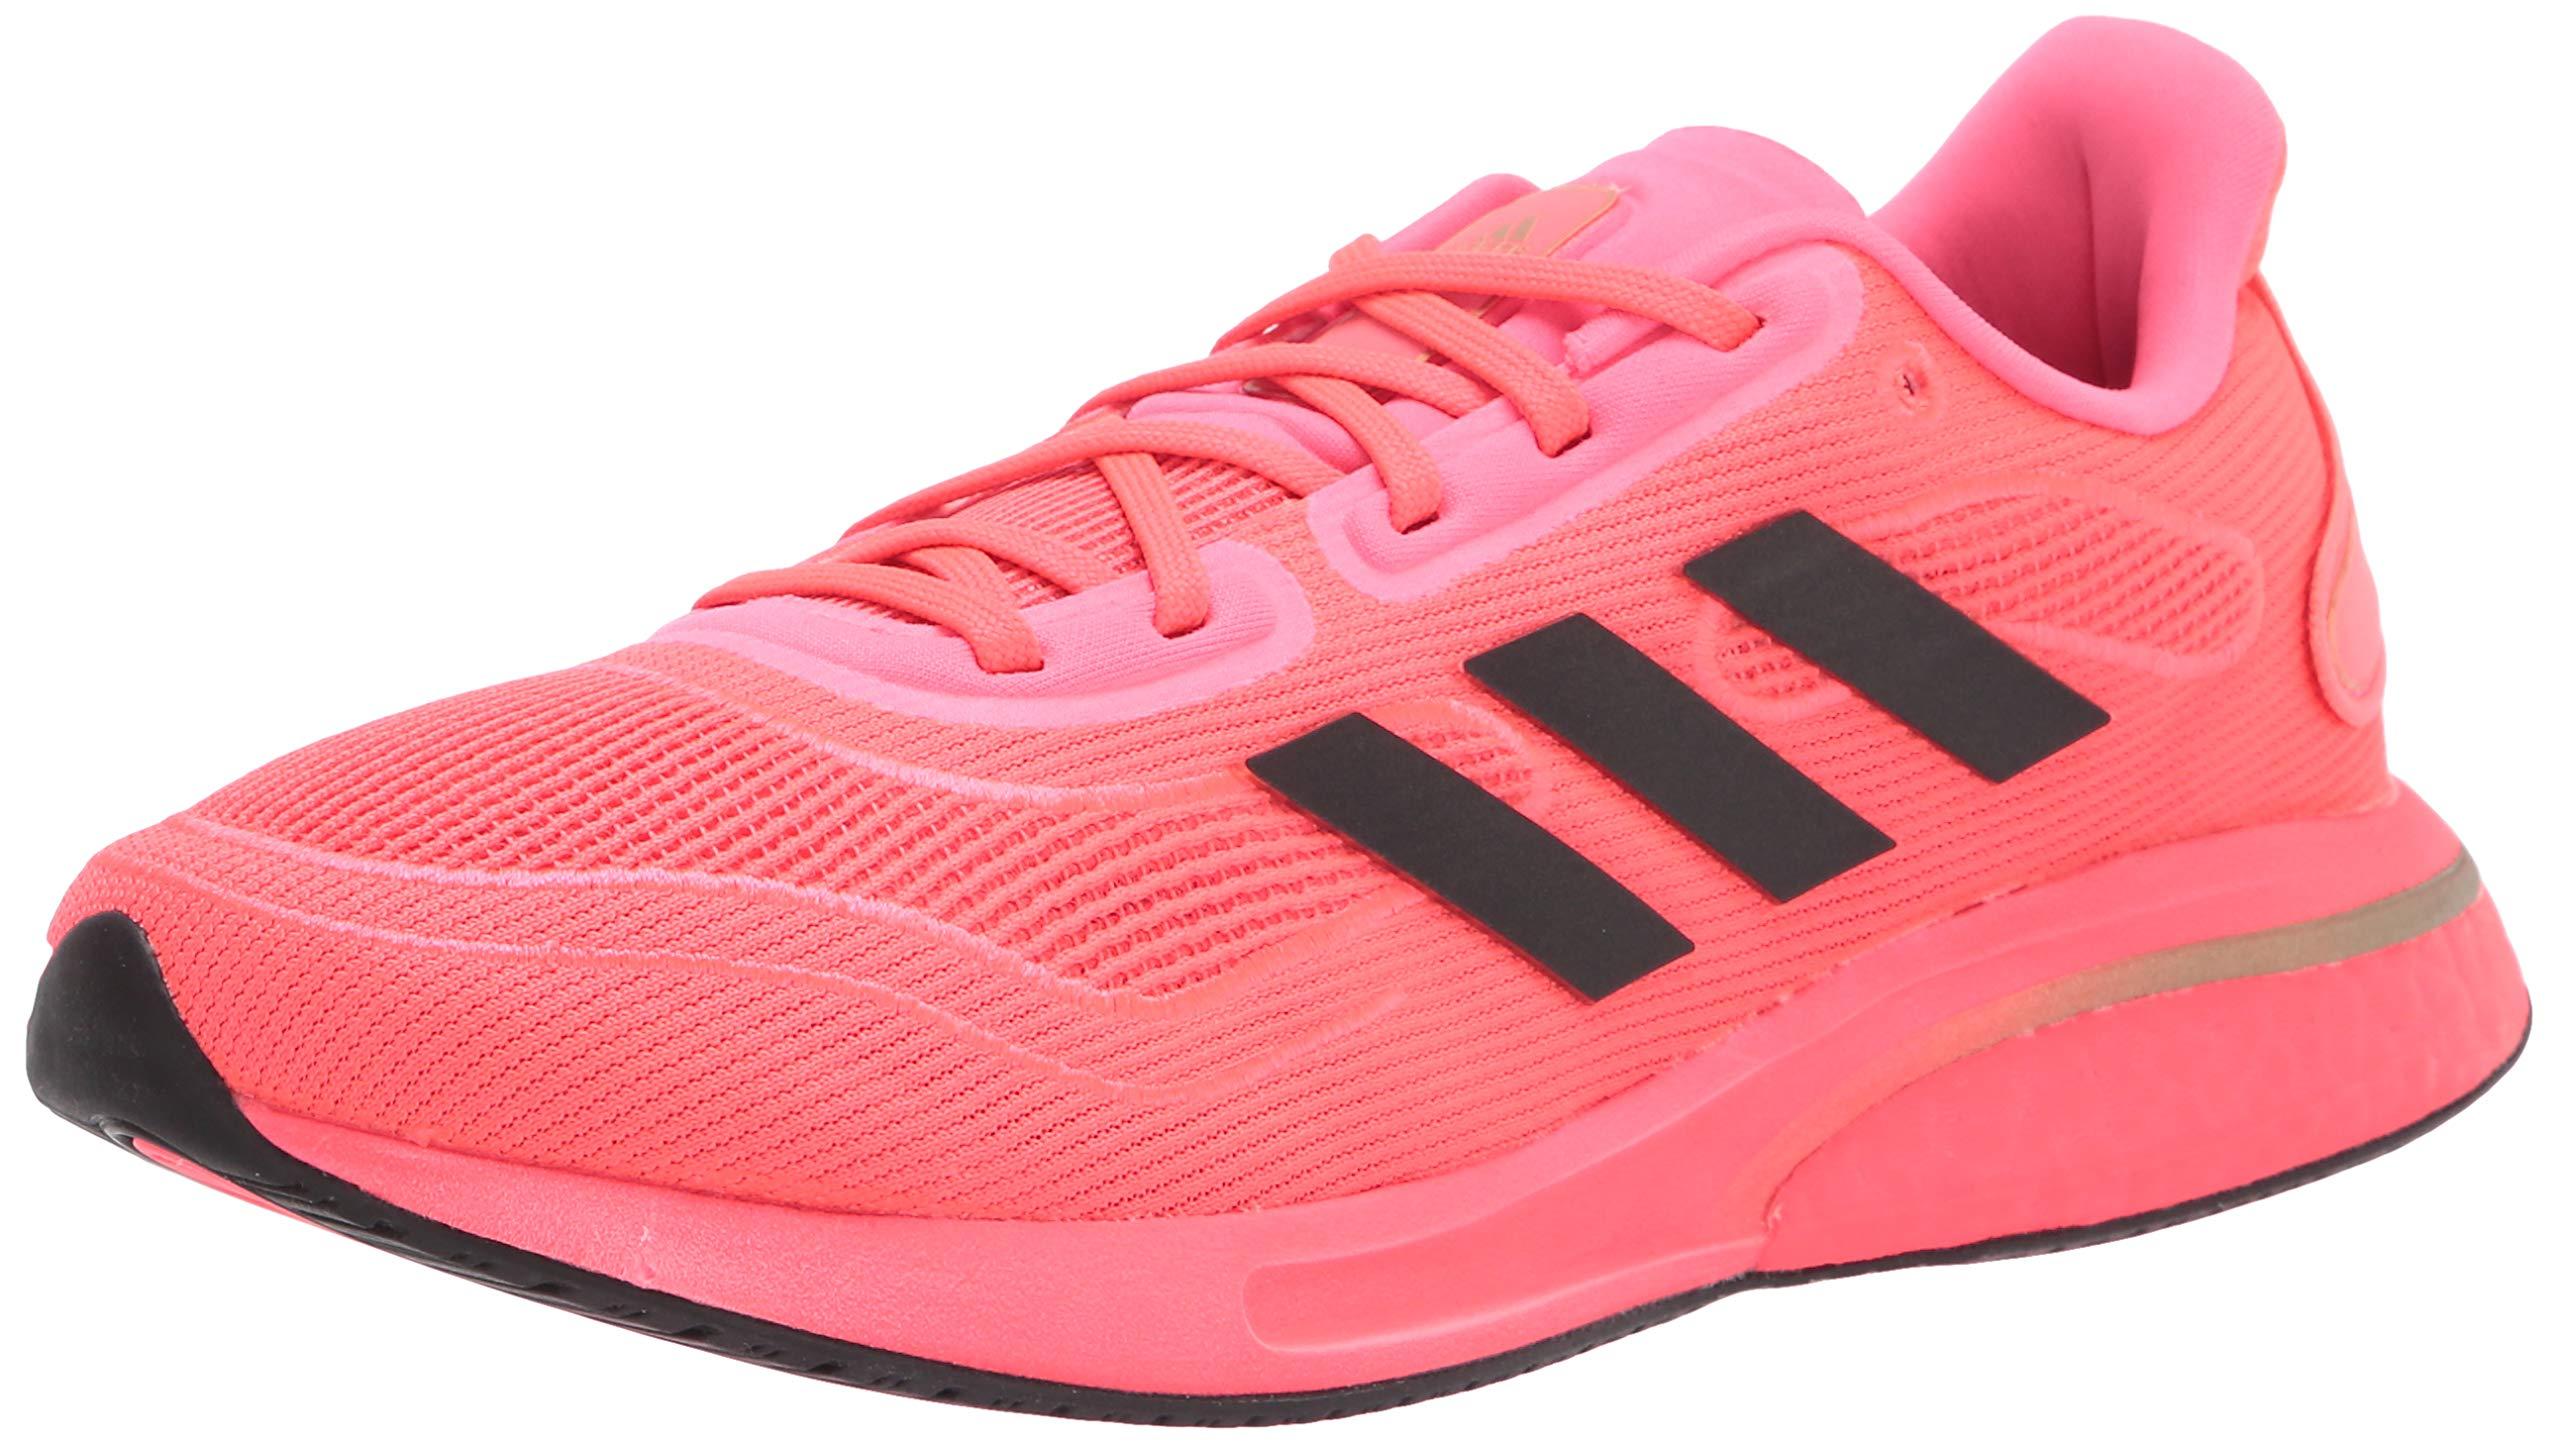 adidas Supernova Running Shoe in Pink for Men - Lyst